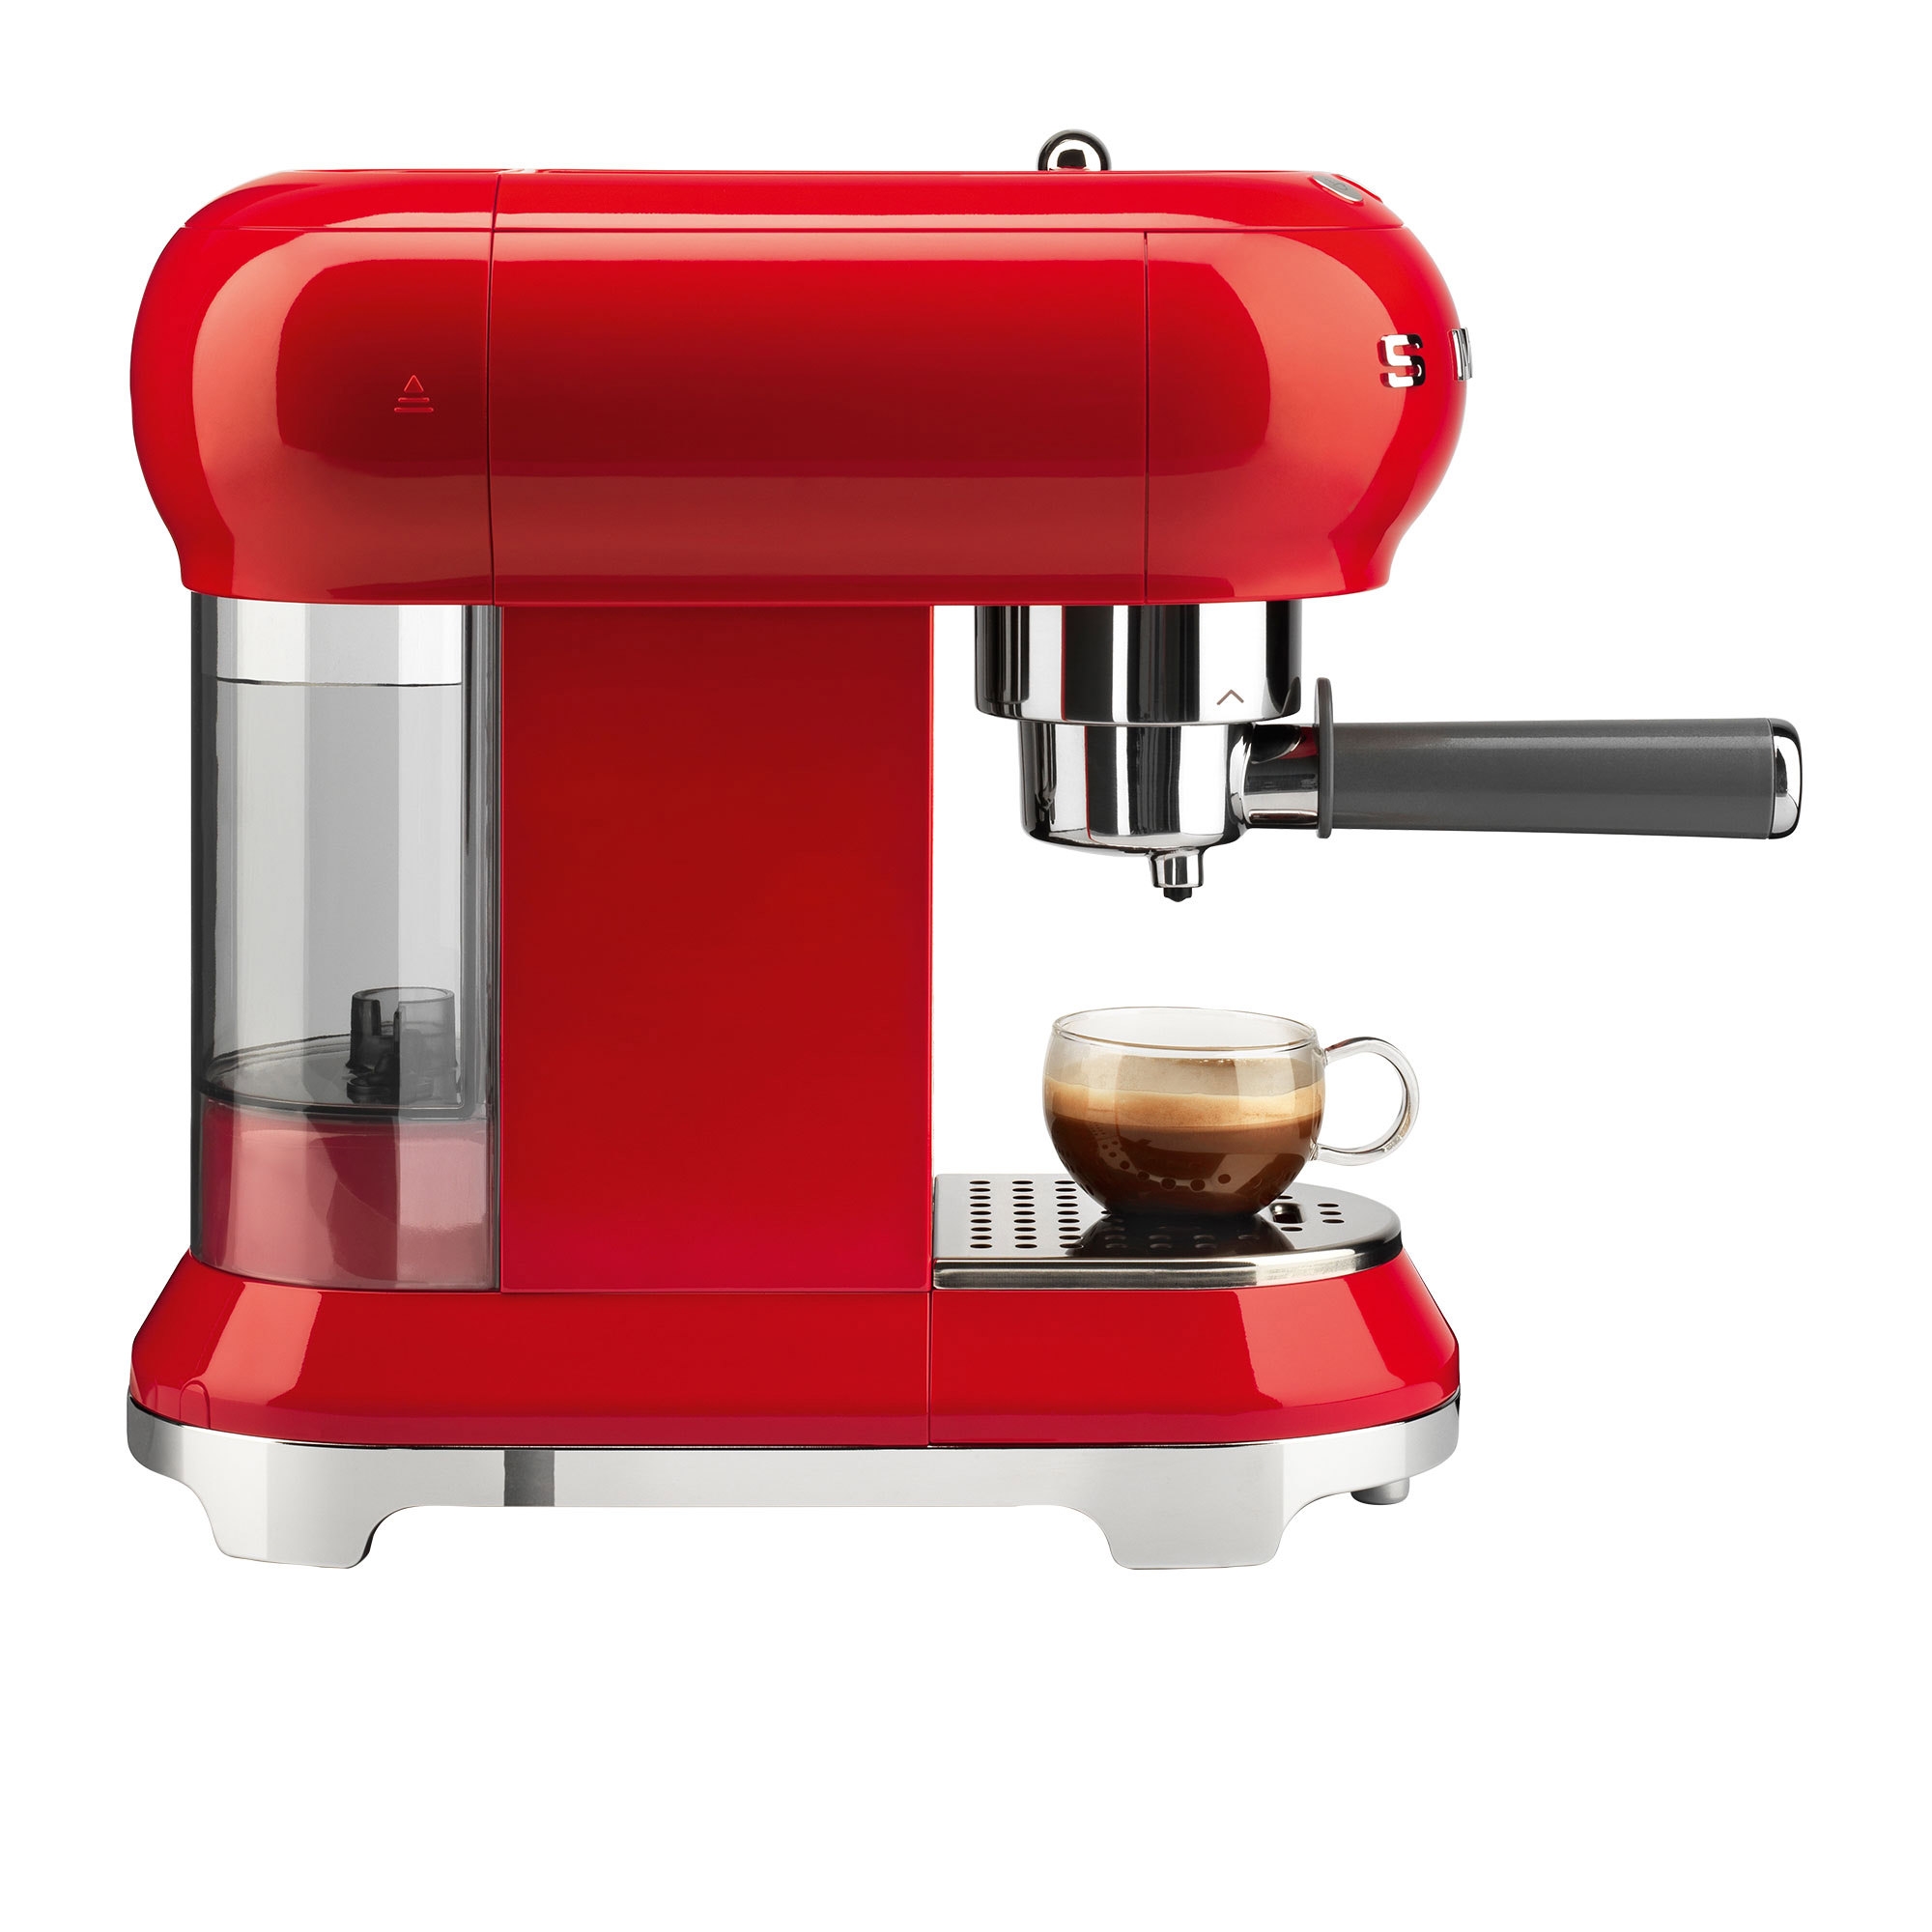 Smeg 50's Retro Style Espresso Coffee Machine Red Image 2